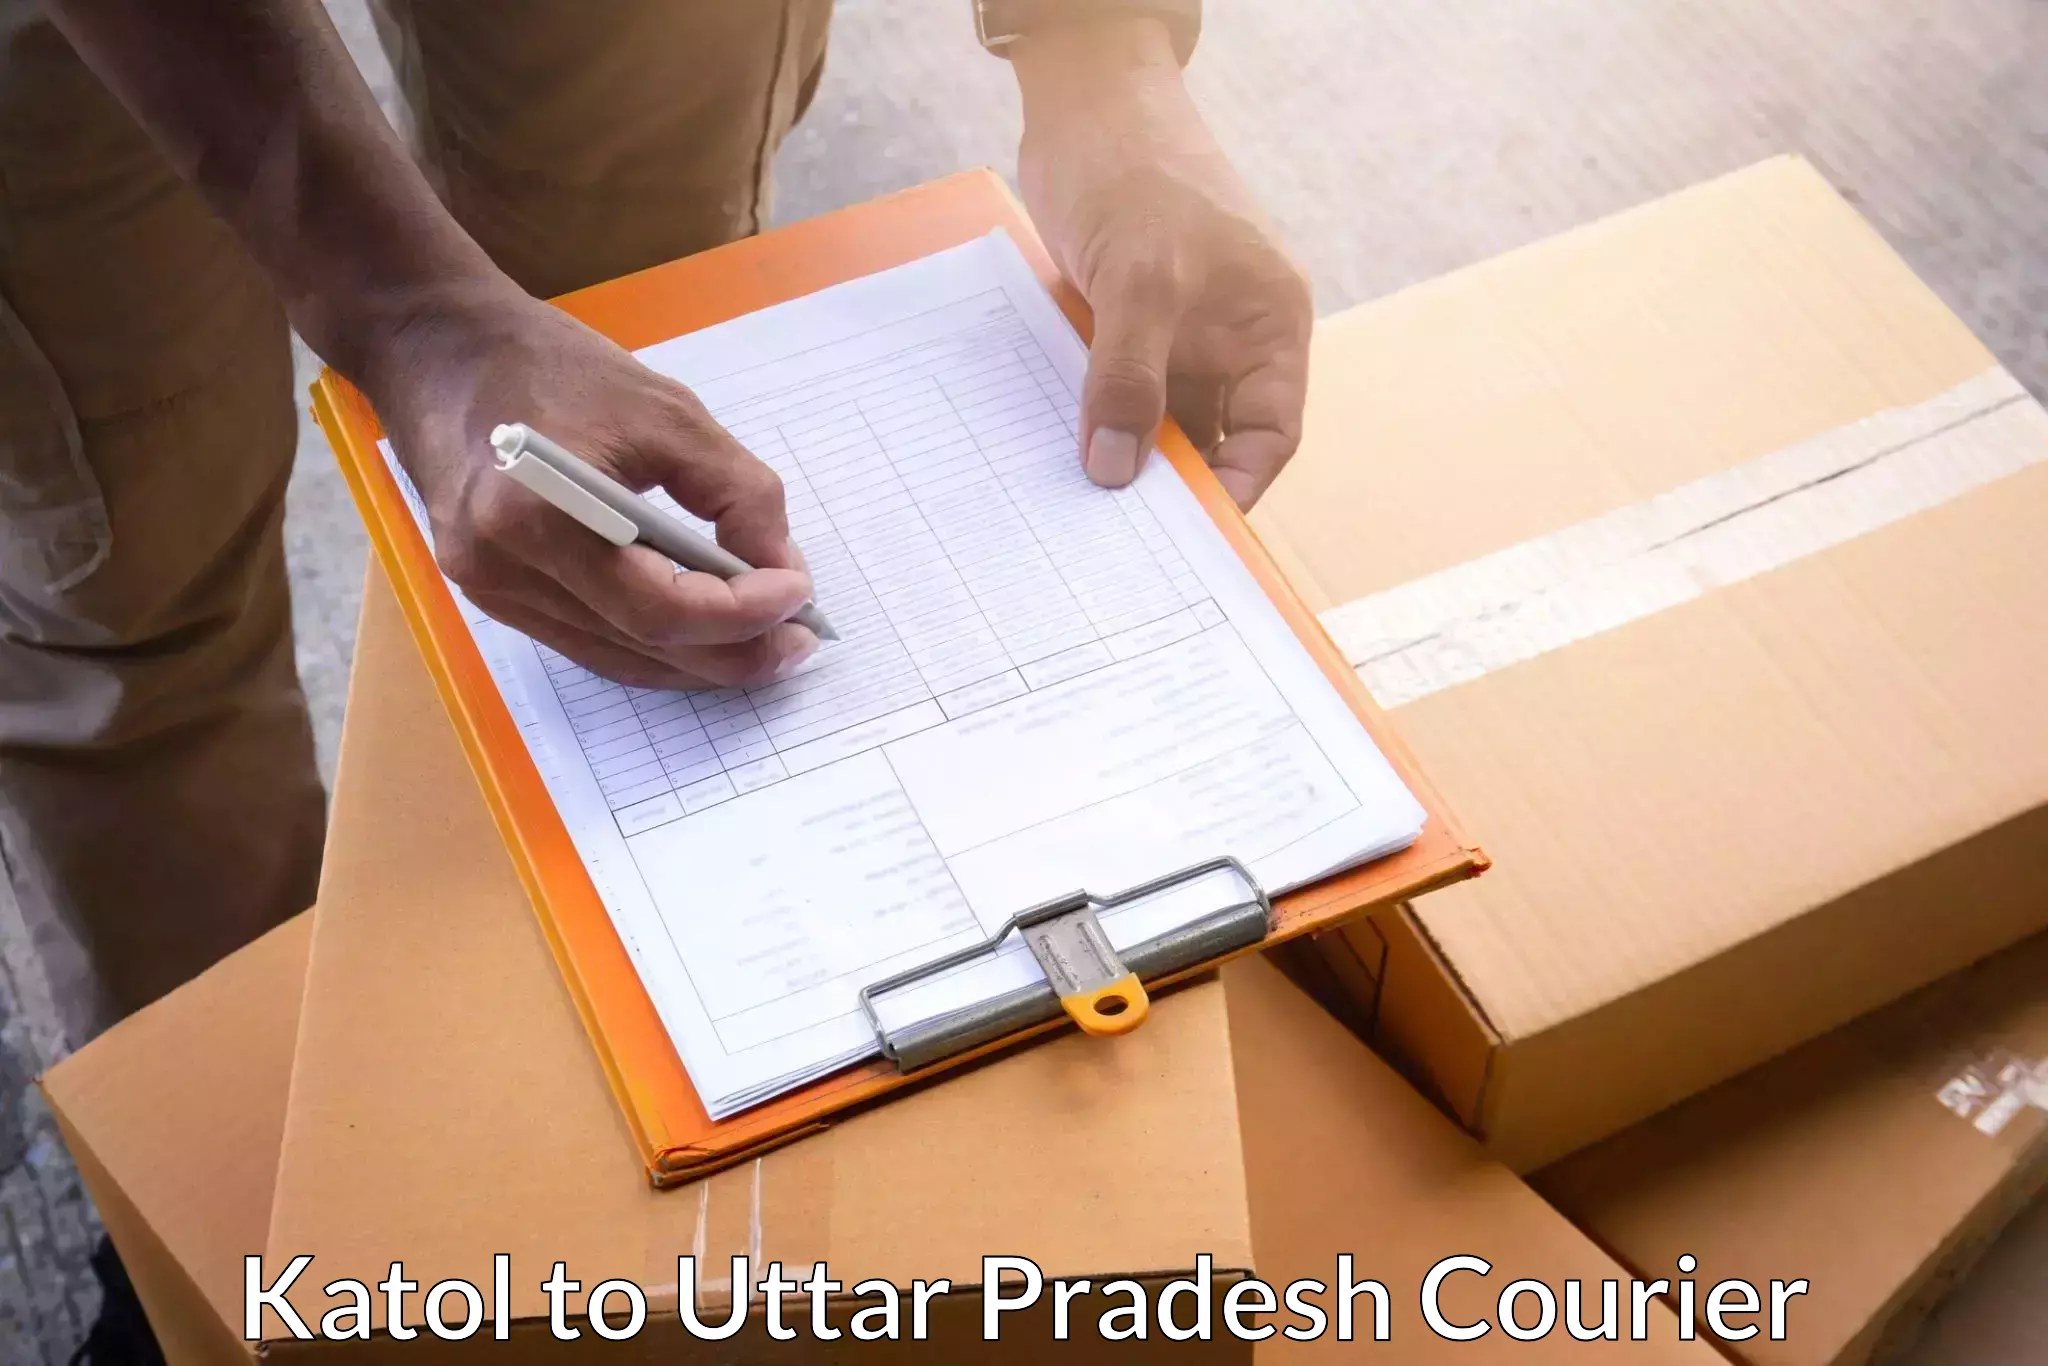 Enhanced tracking features in Katol to Uttar Pradesh